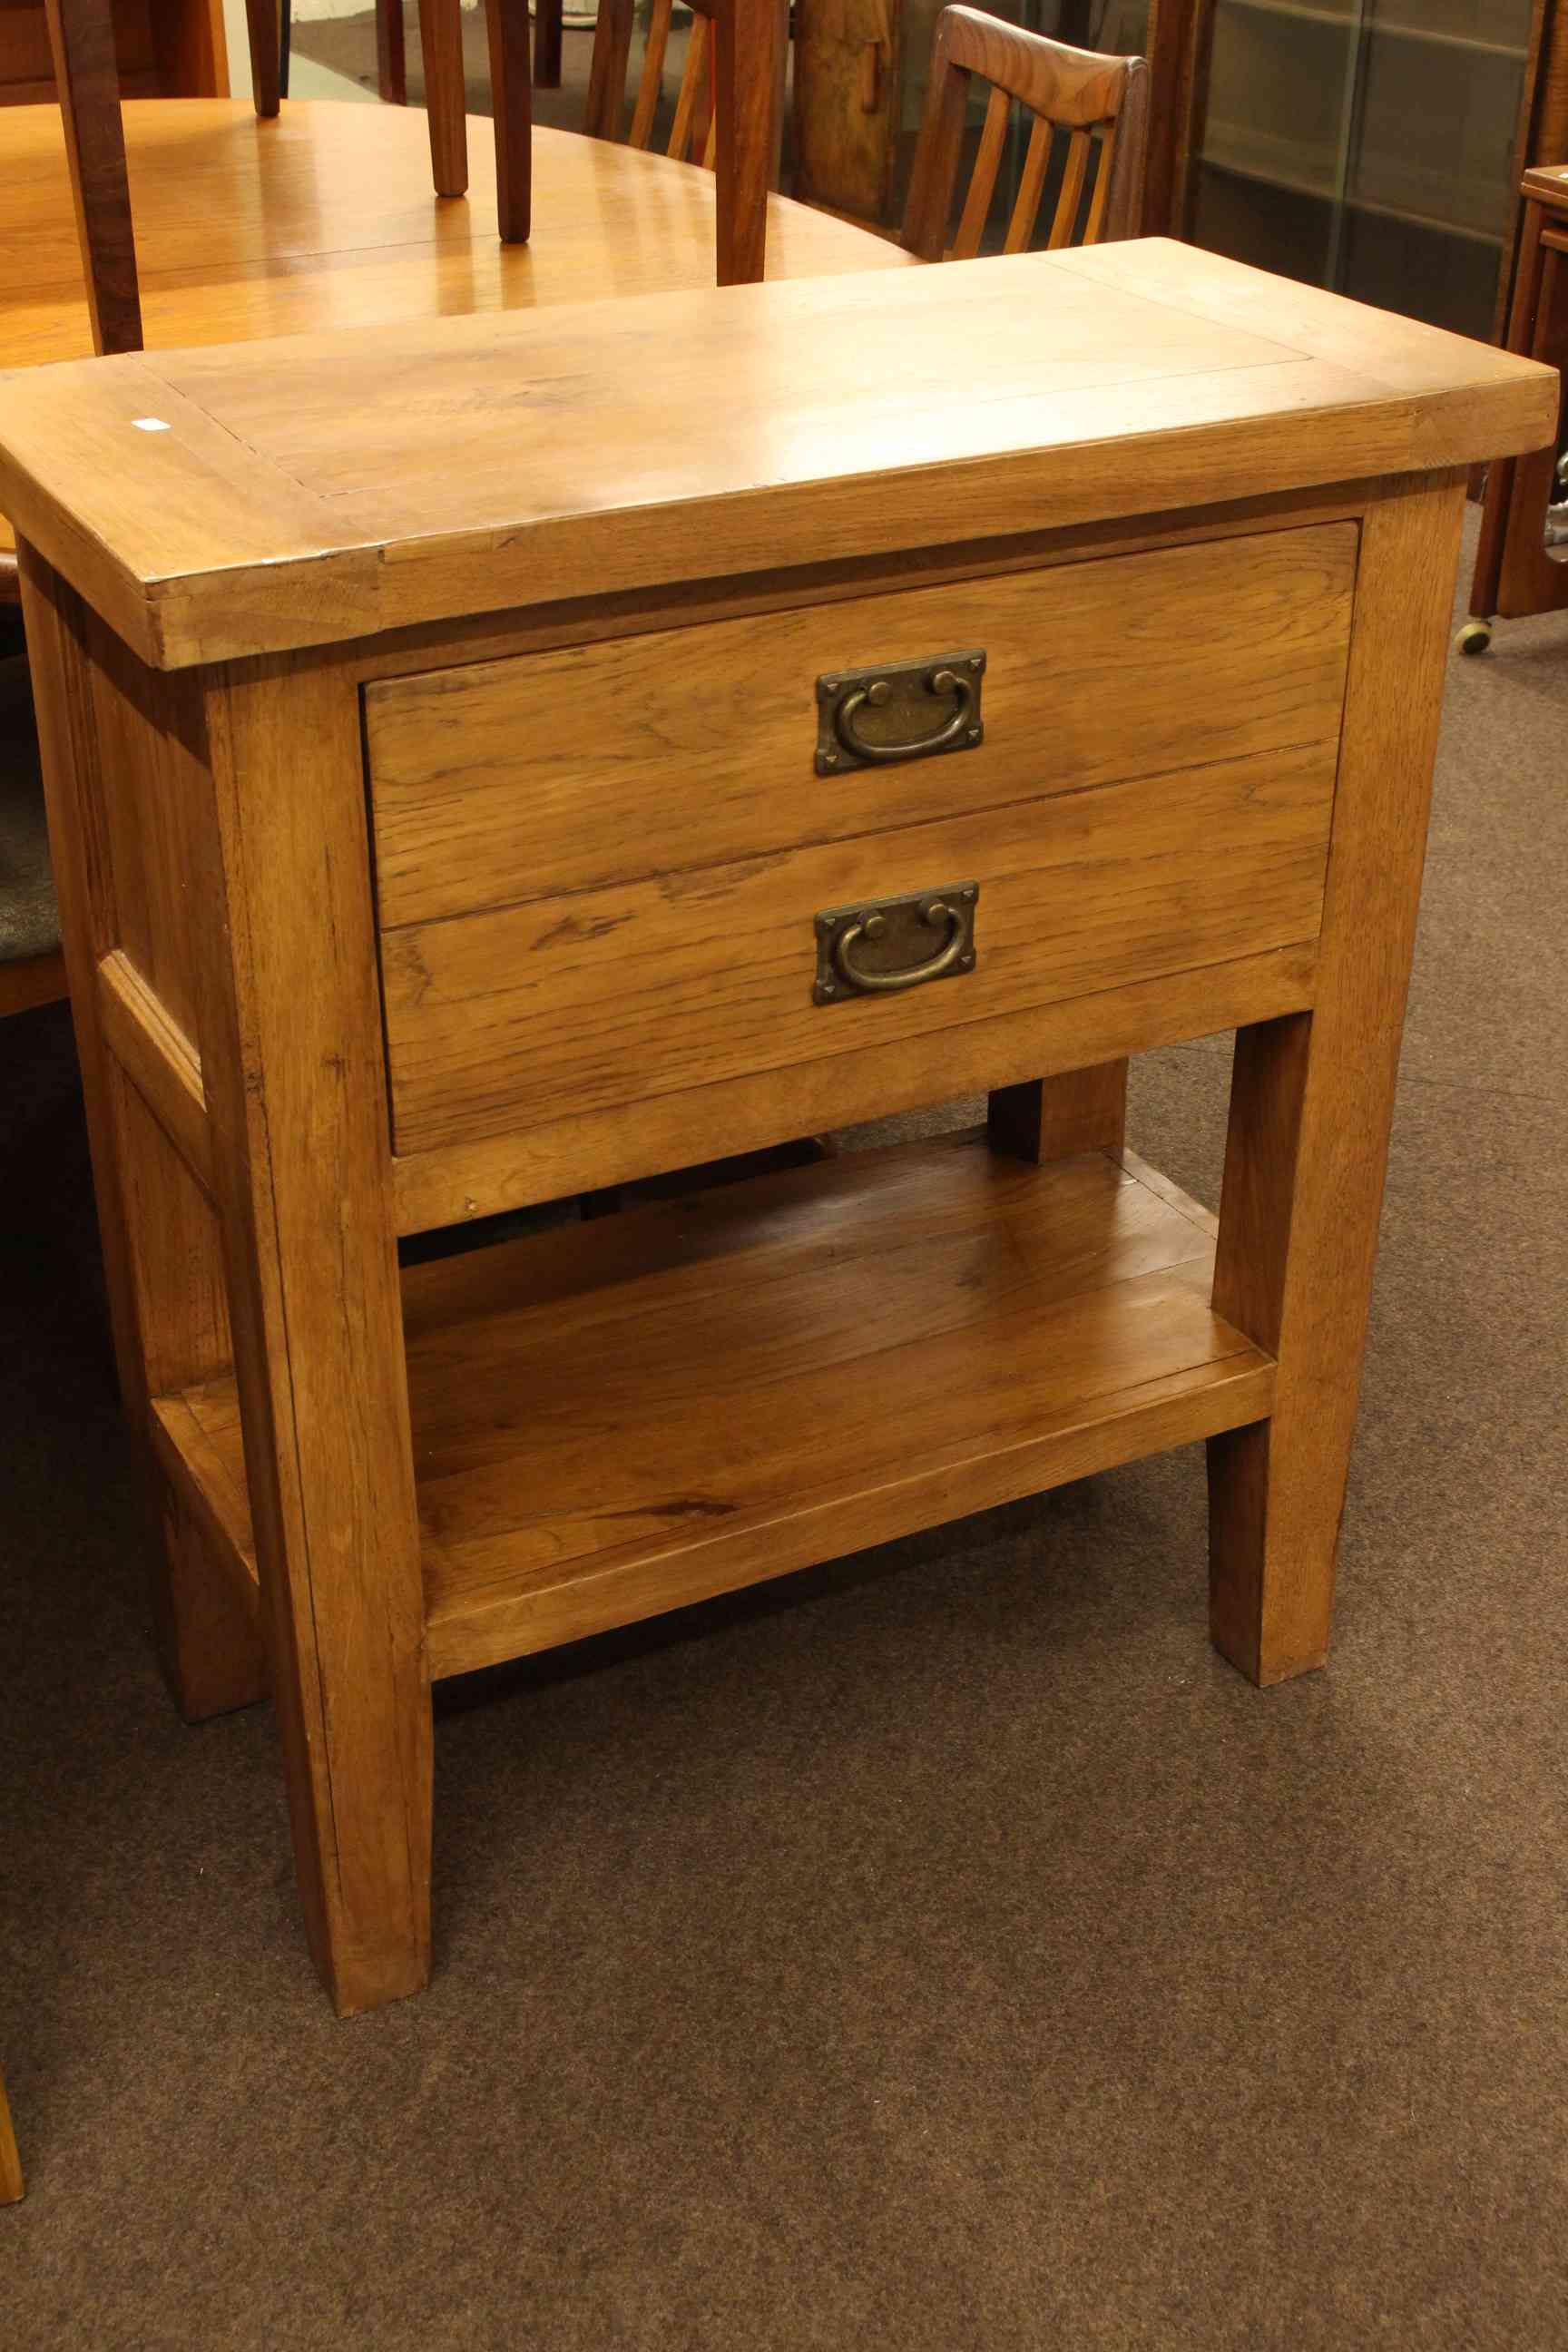 Oak deep drawer hall table with undershelf, 86.5cm x 75cm x 37cm.